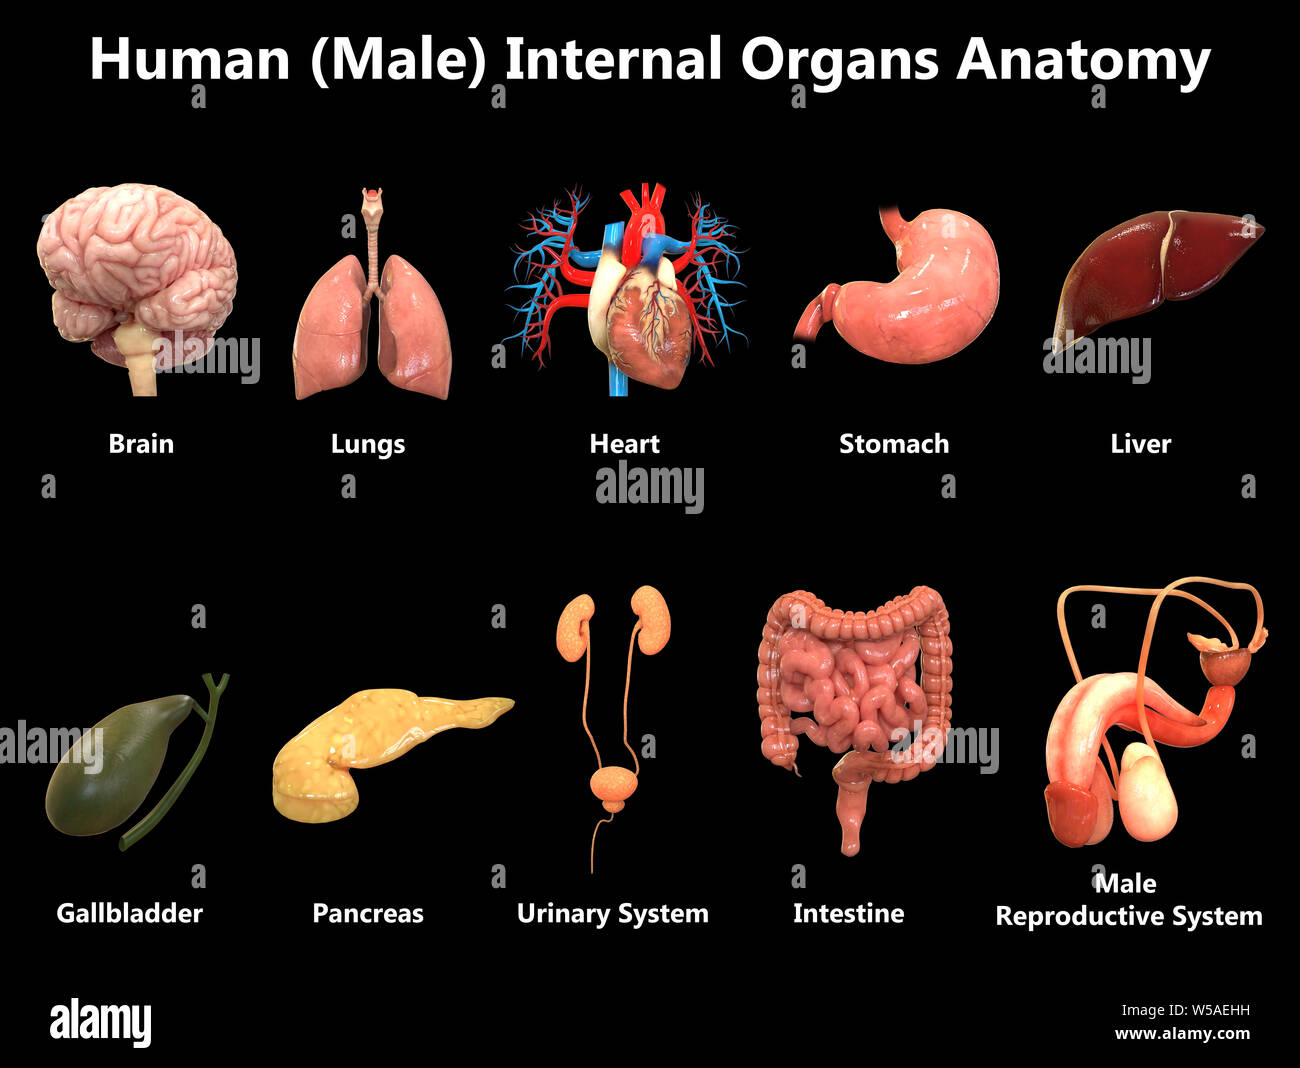 male internal organs anatomy